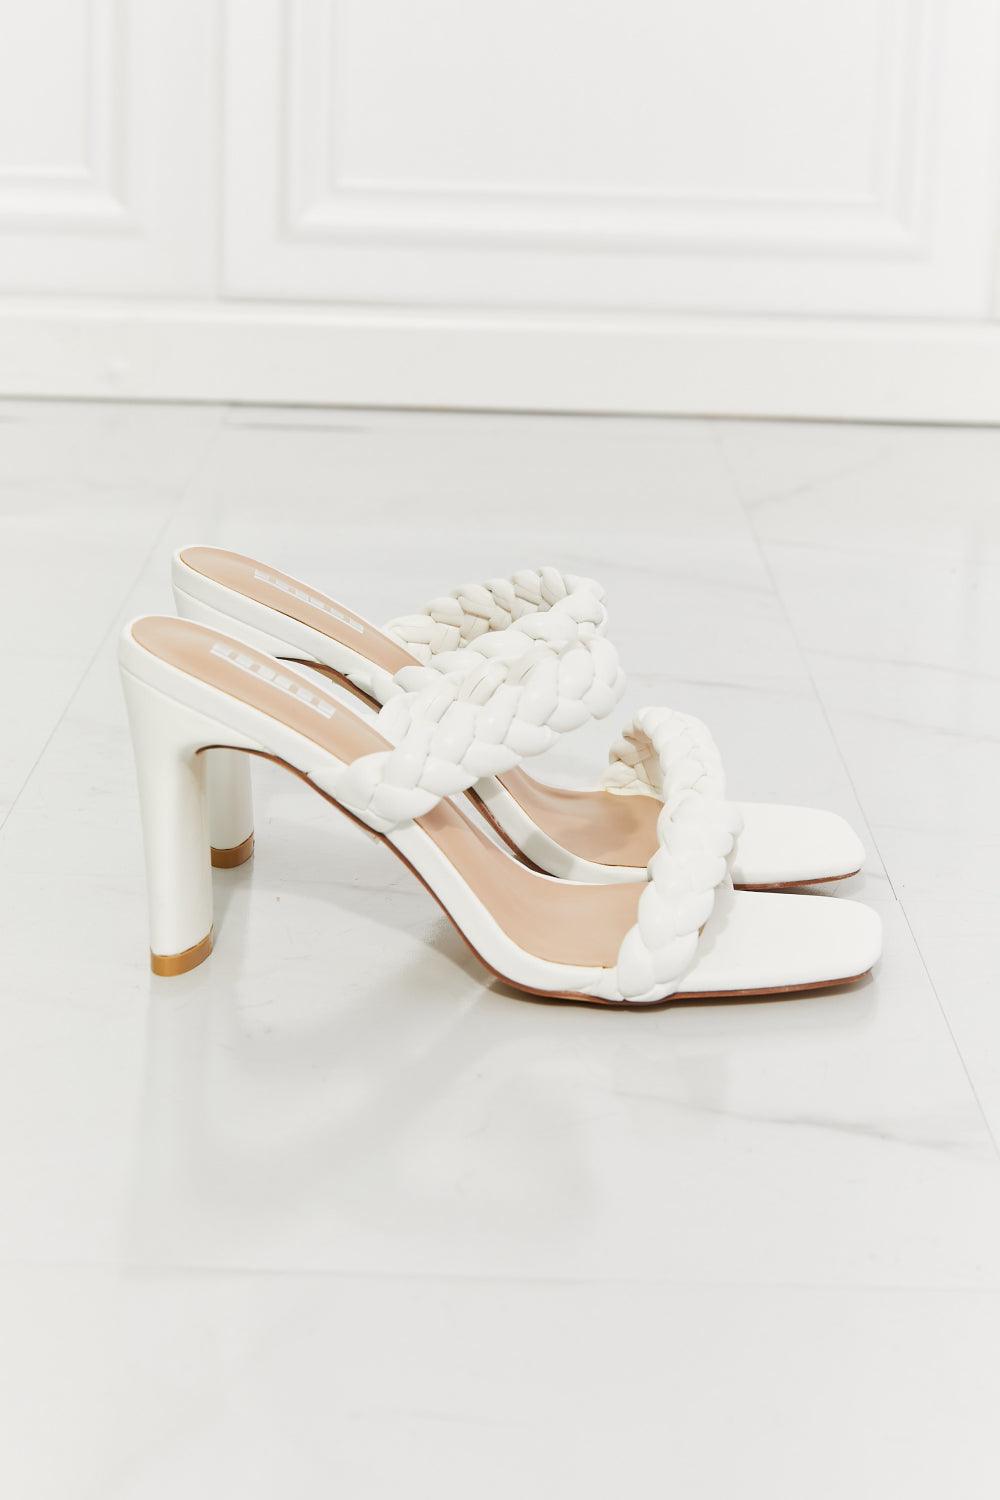 Women's Shoes - Sandals Braided Block Heel Sandals White